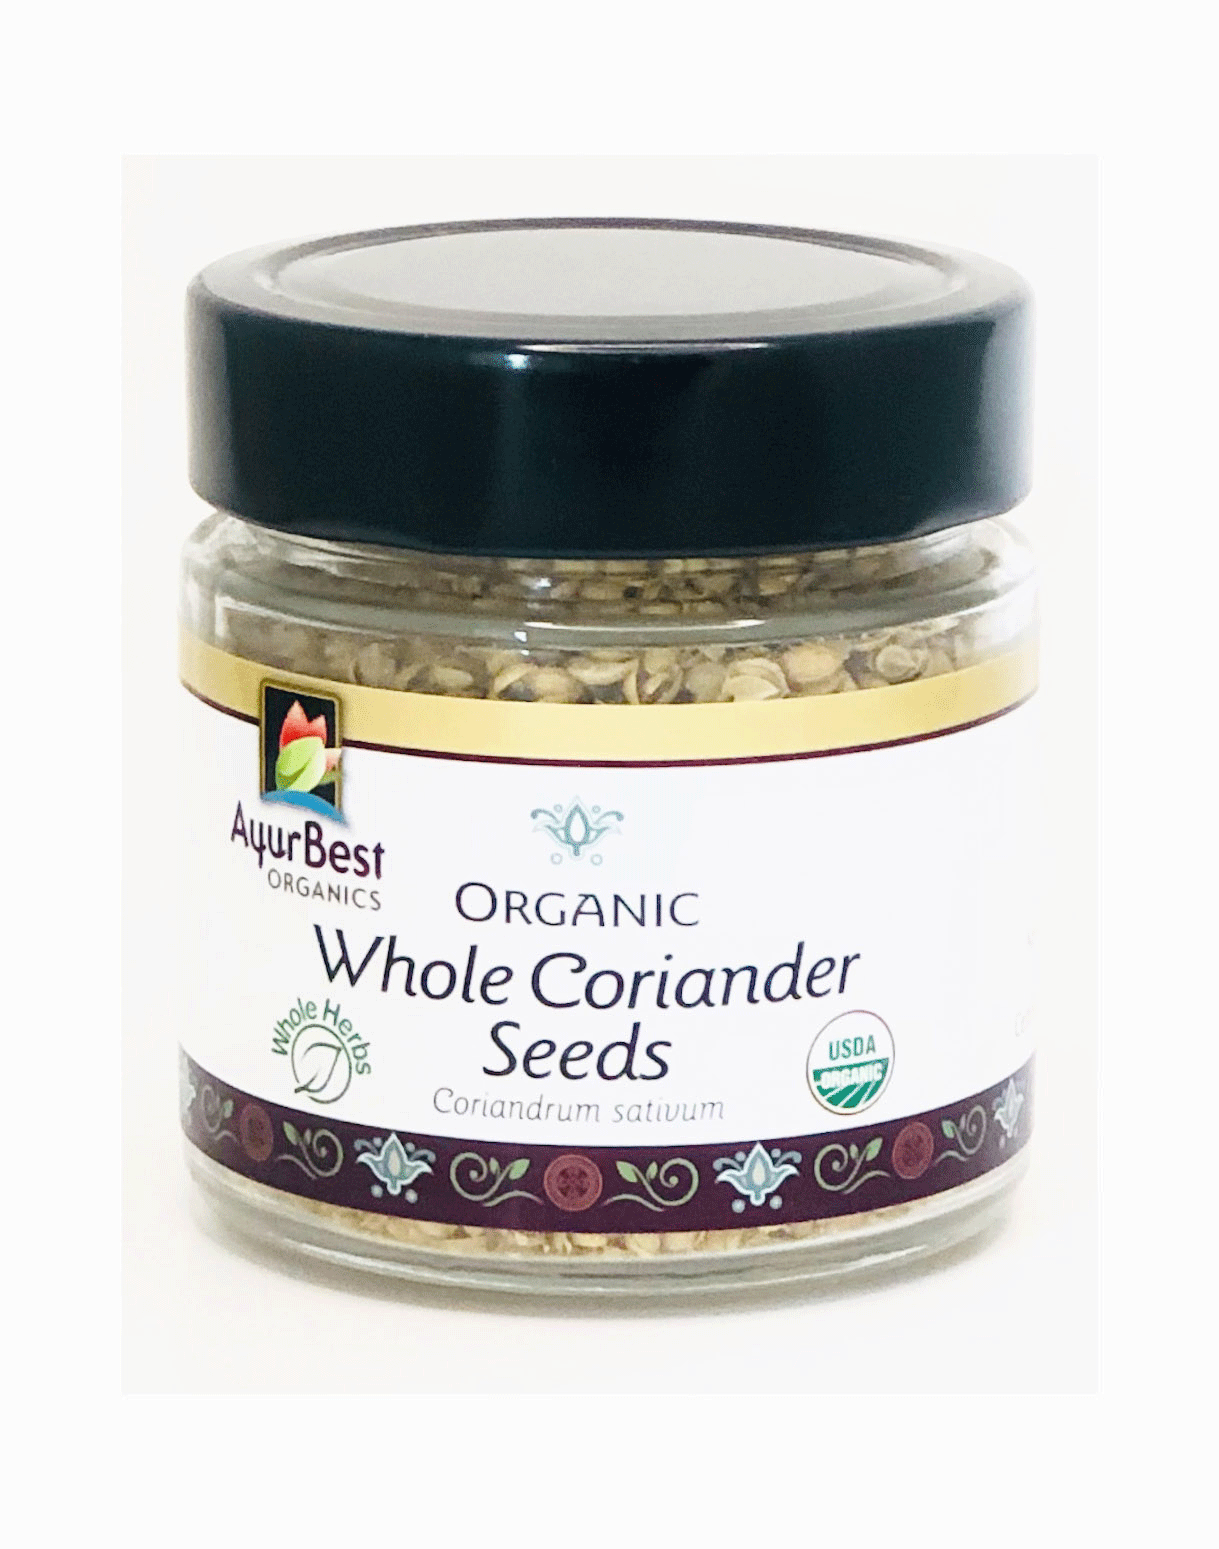 Organic Whole Coriander Seed 2.3oz Jars.